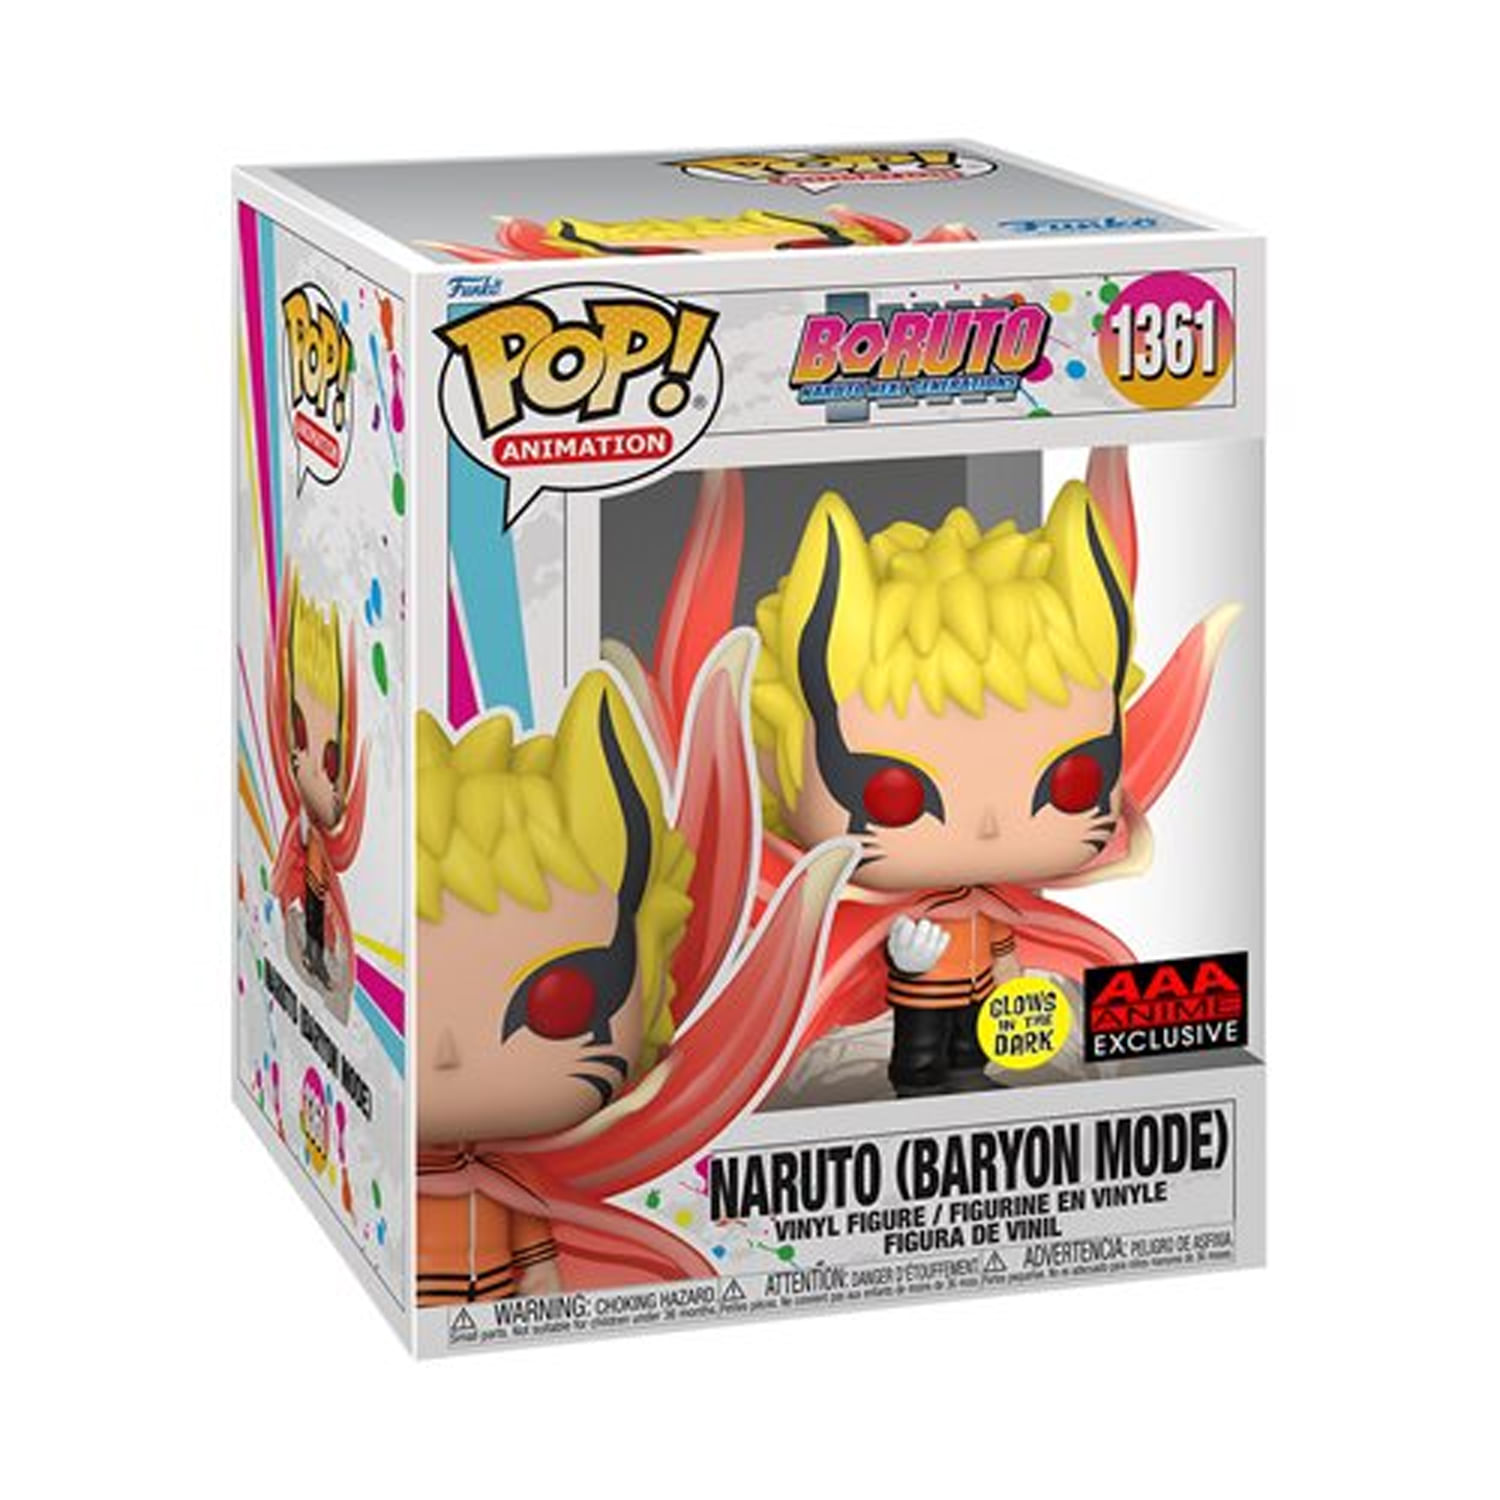 Boruto Naruto Next Generations Naruto Baryon Mode GID Super 6 Inch Pop Vinyl Figure 1361 AAA Anime E